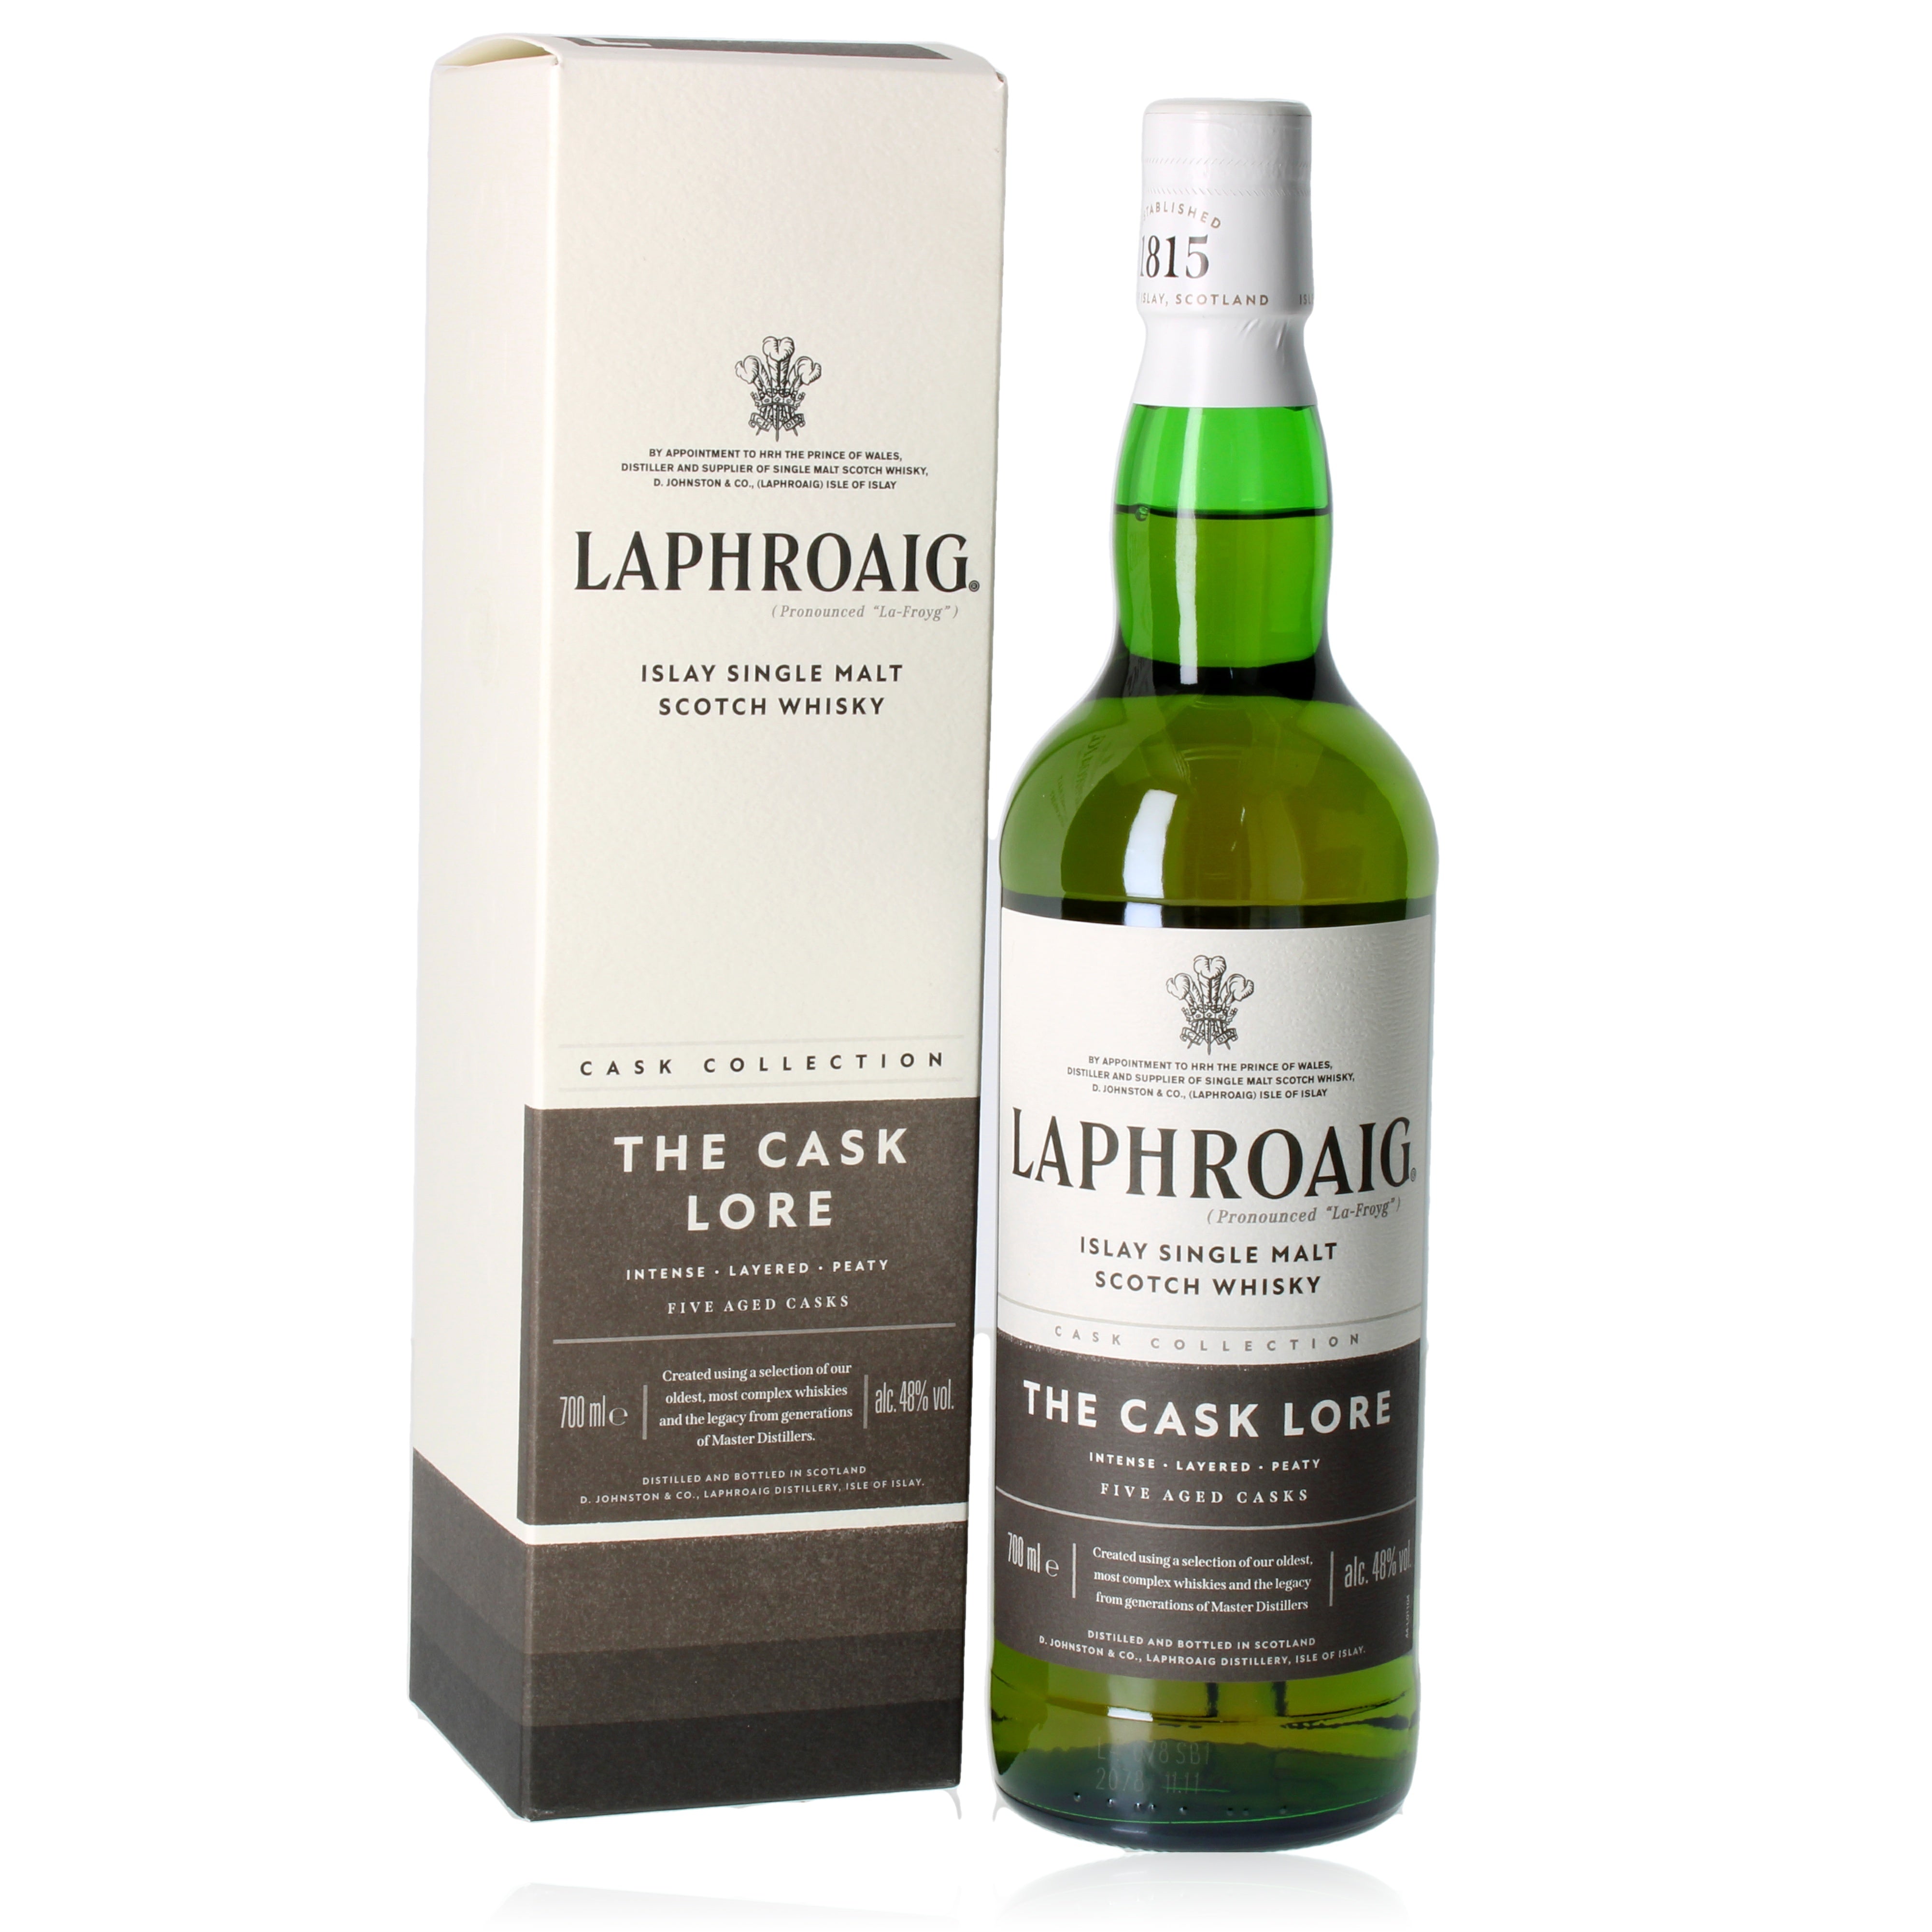 Laphroaig Lore Islay Single Malt Scotch Whiskey 0.7l, alc. 48% by volume